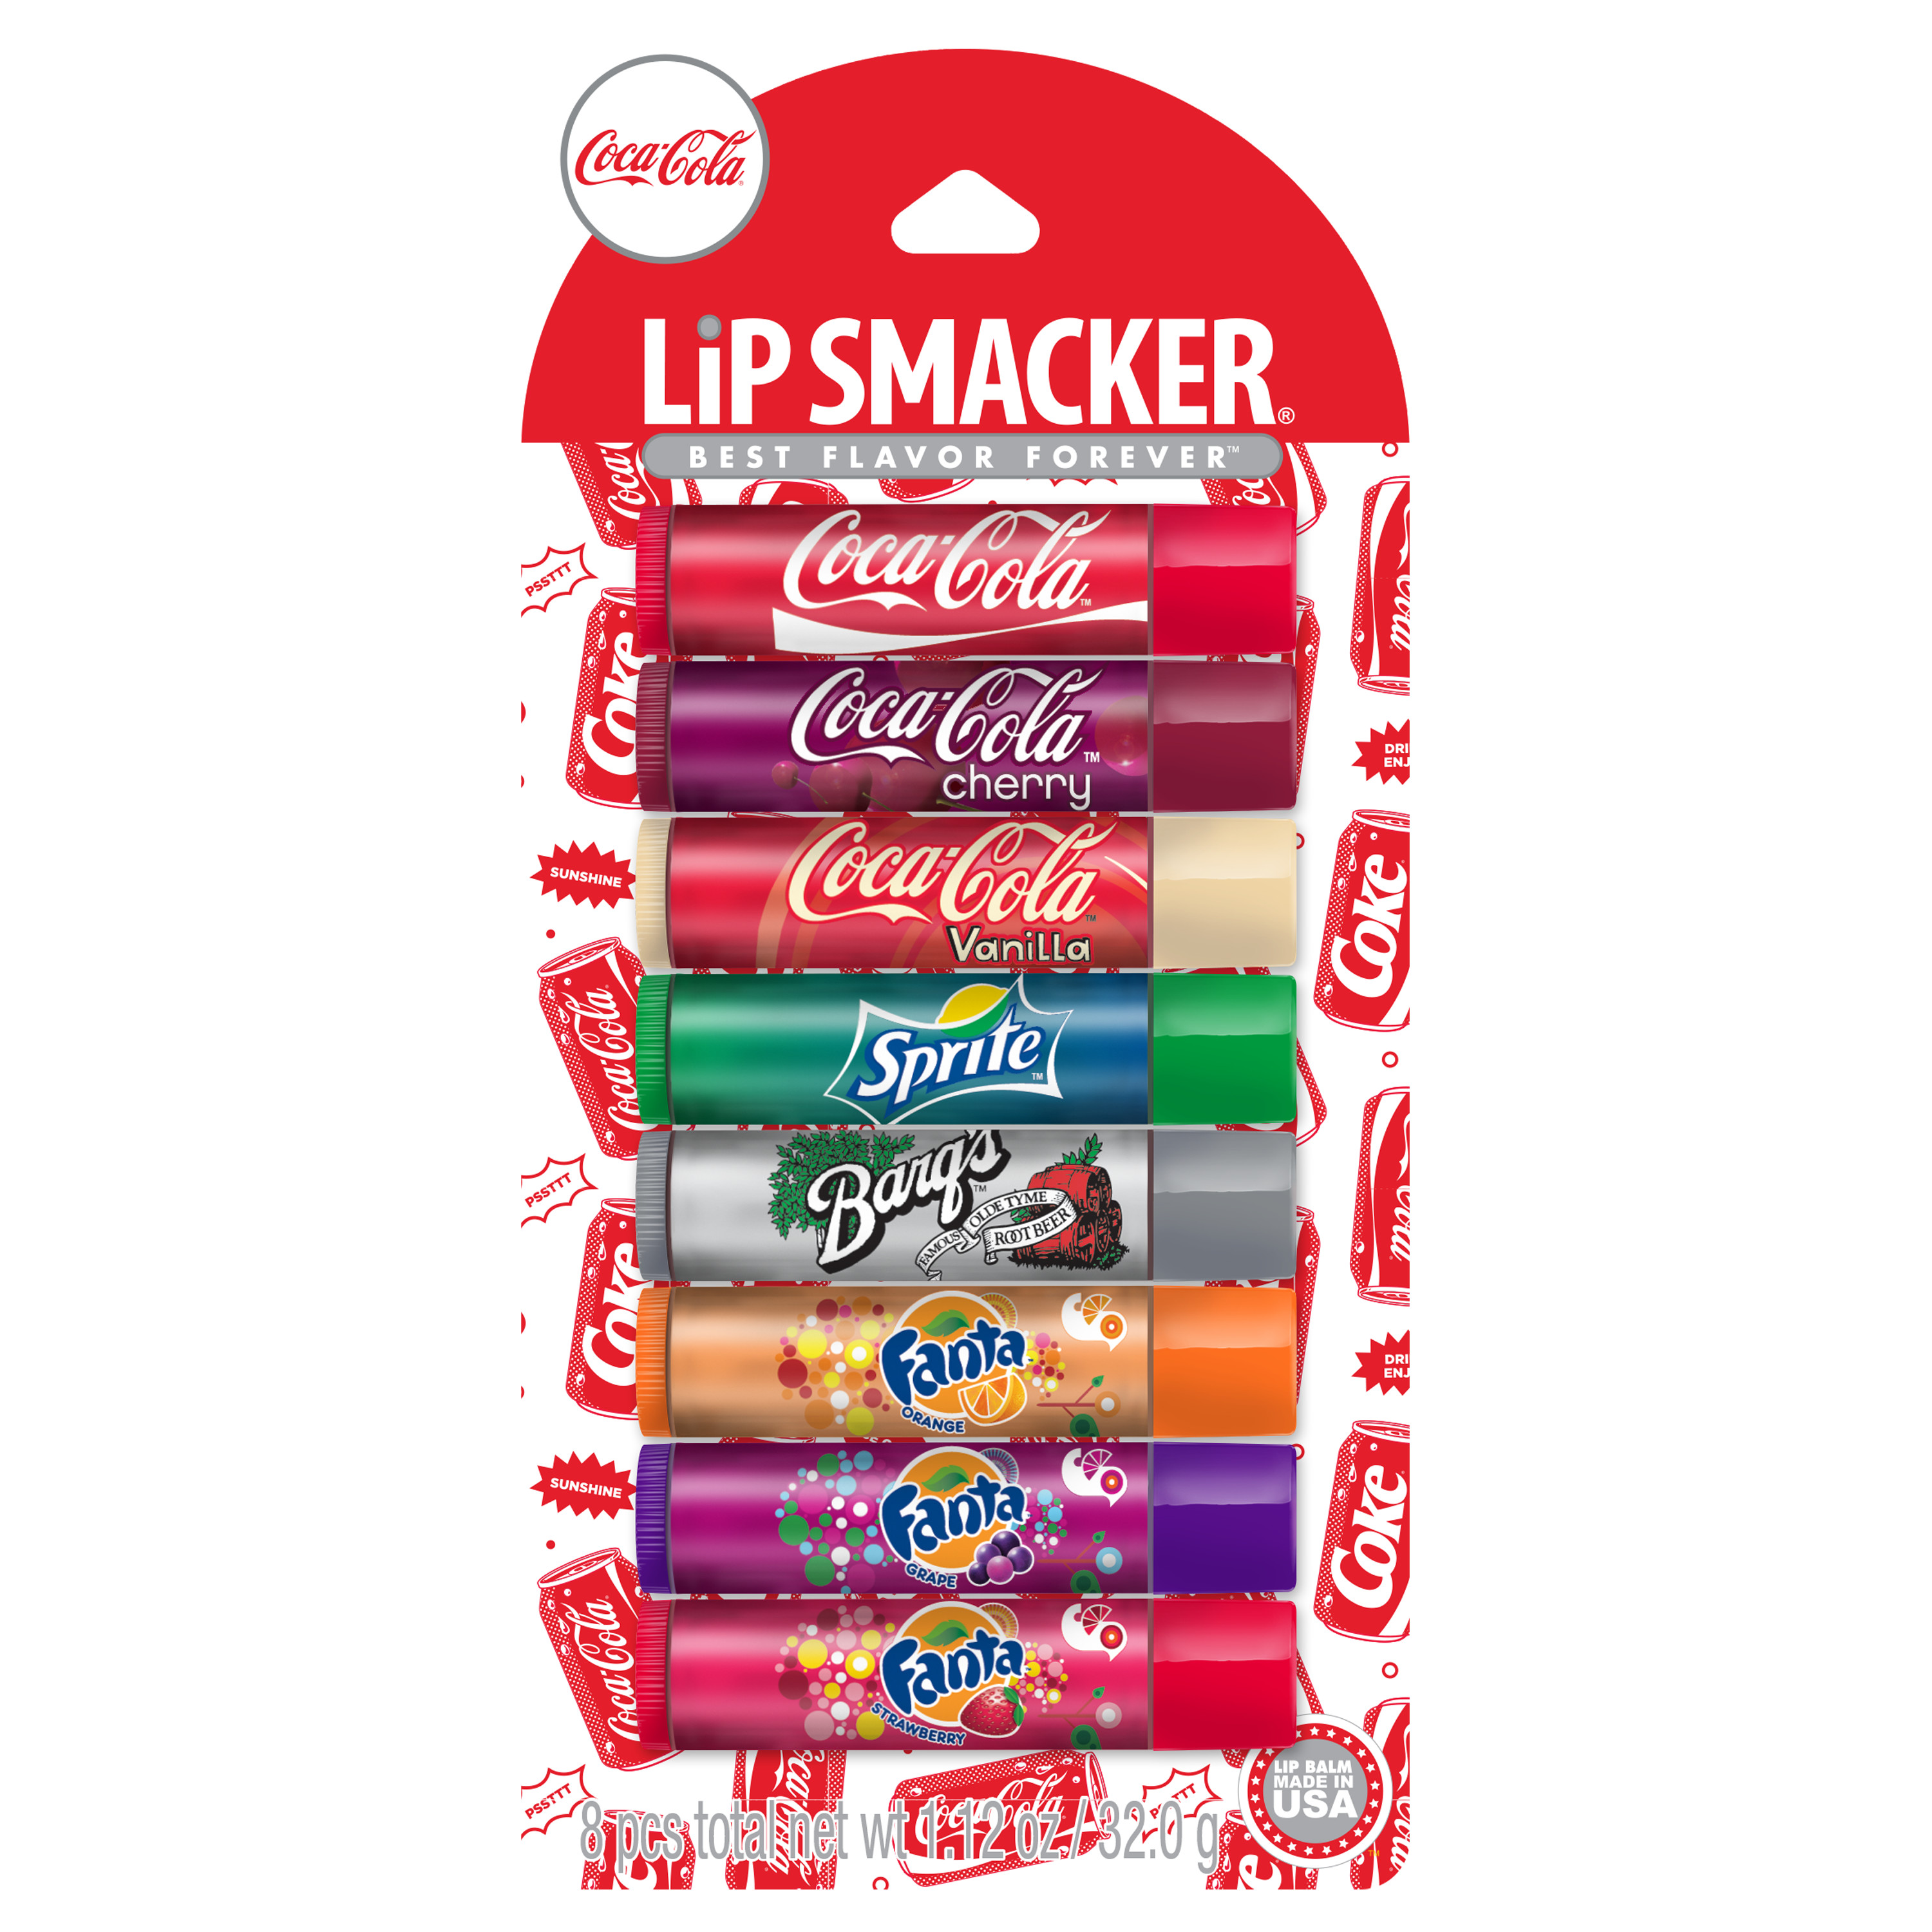 Lip Smacker Coca Cola Lip Balm Party Pack - image 2 of 8